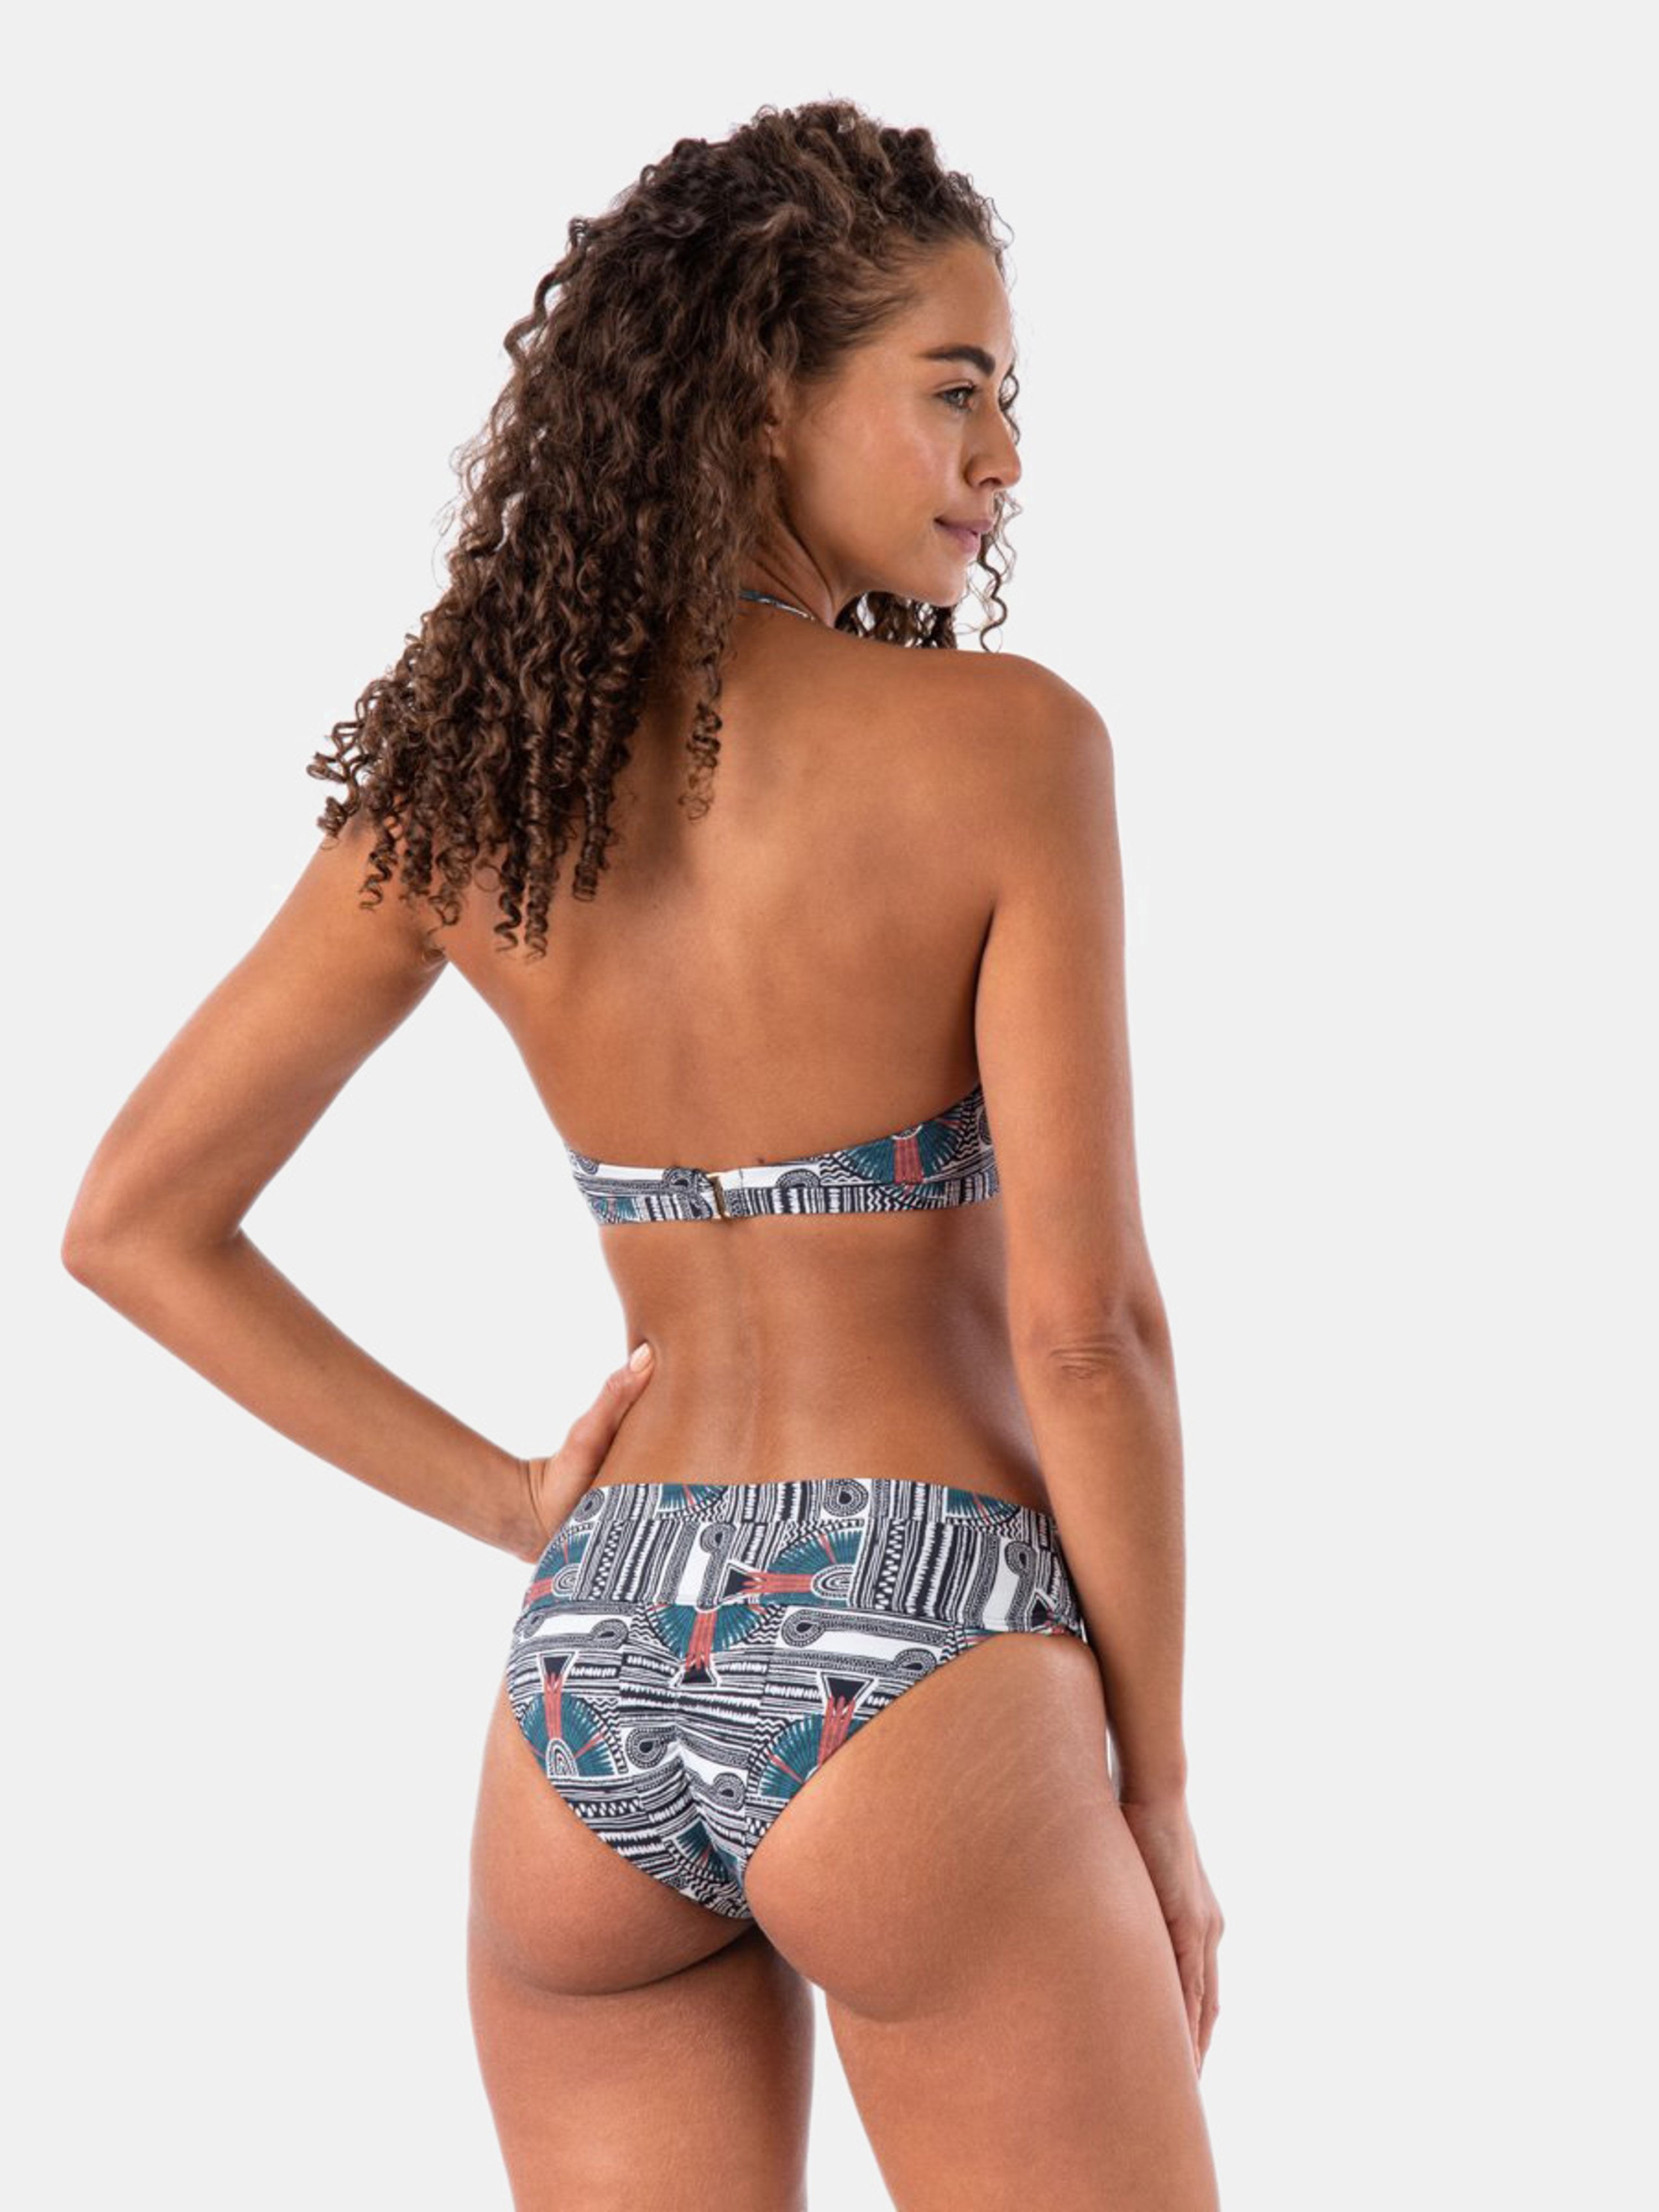 Bromelia Swimwear Belo Horizonte Bikini Bottoms In Grey